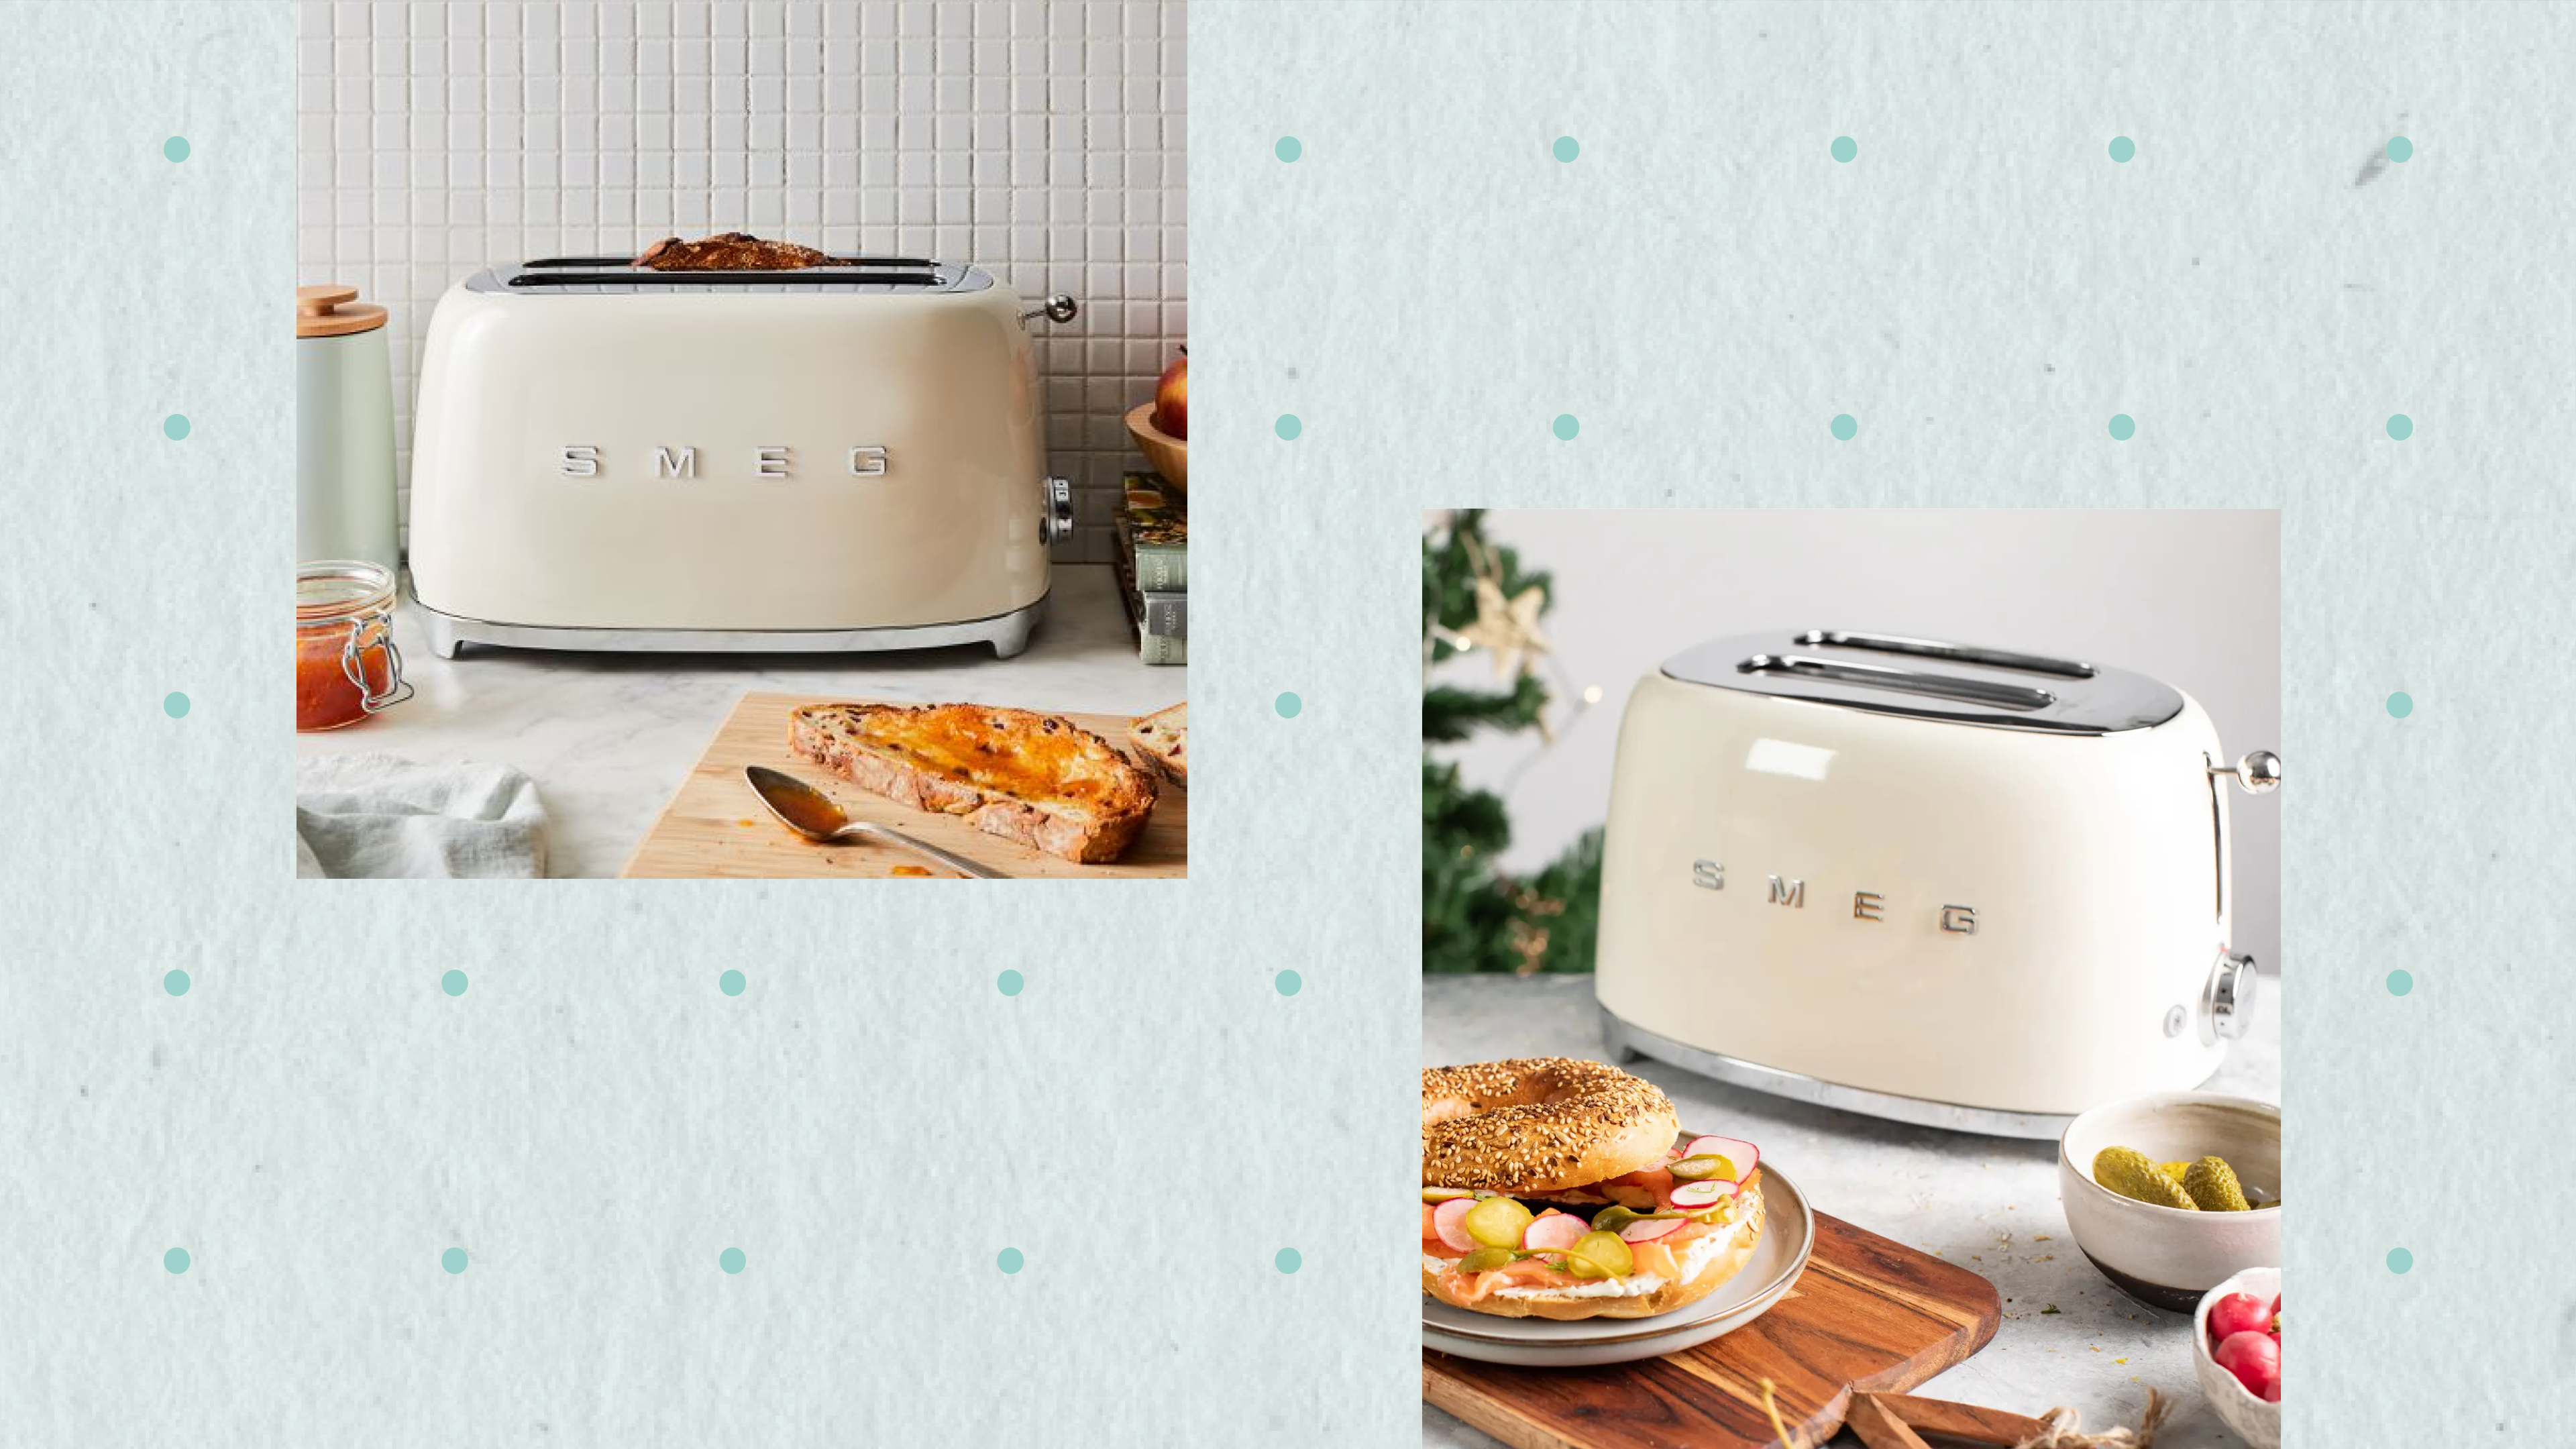 Smeg toaster in cream set on a table alongside a food spread